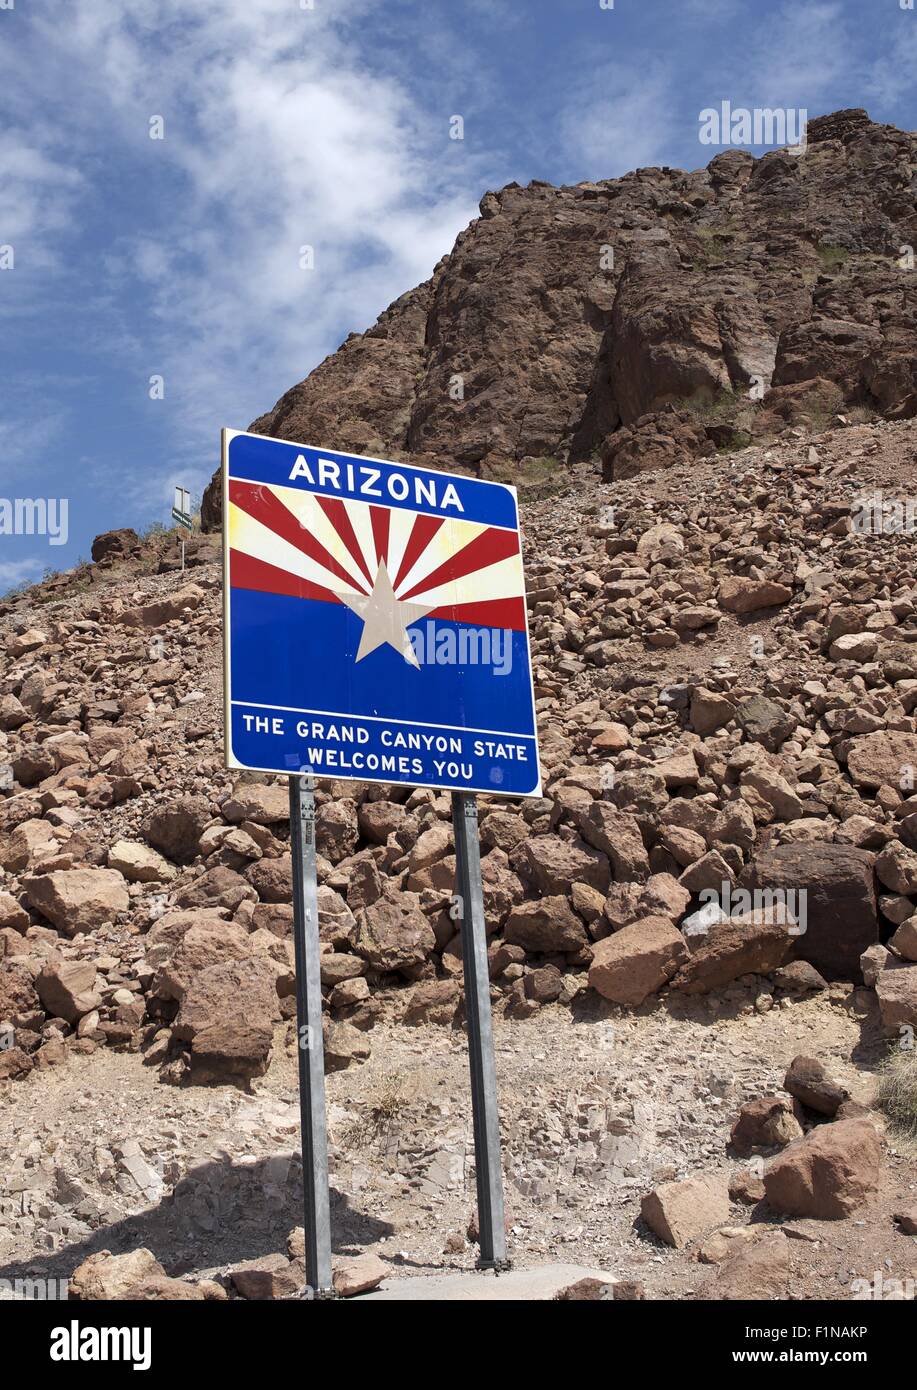 Arizona Welcomes You. Arizona State Entrance Sign. The Grand Canyon State. Stock Photo